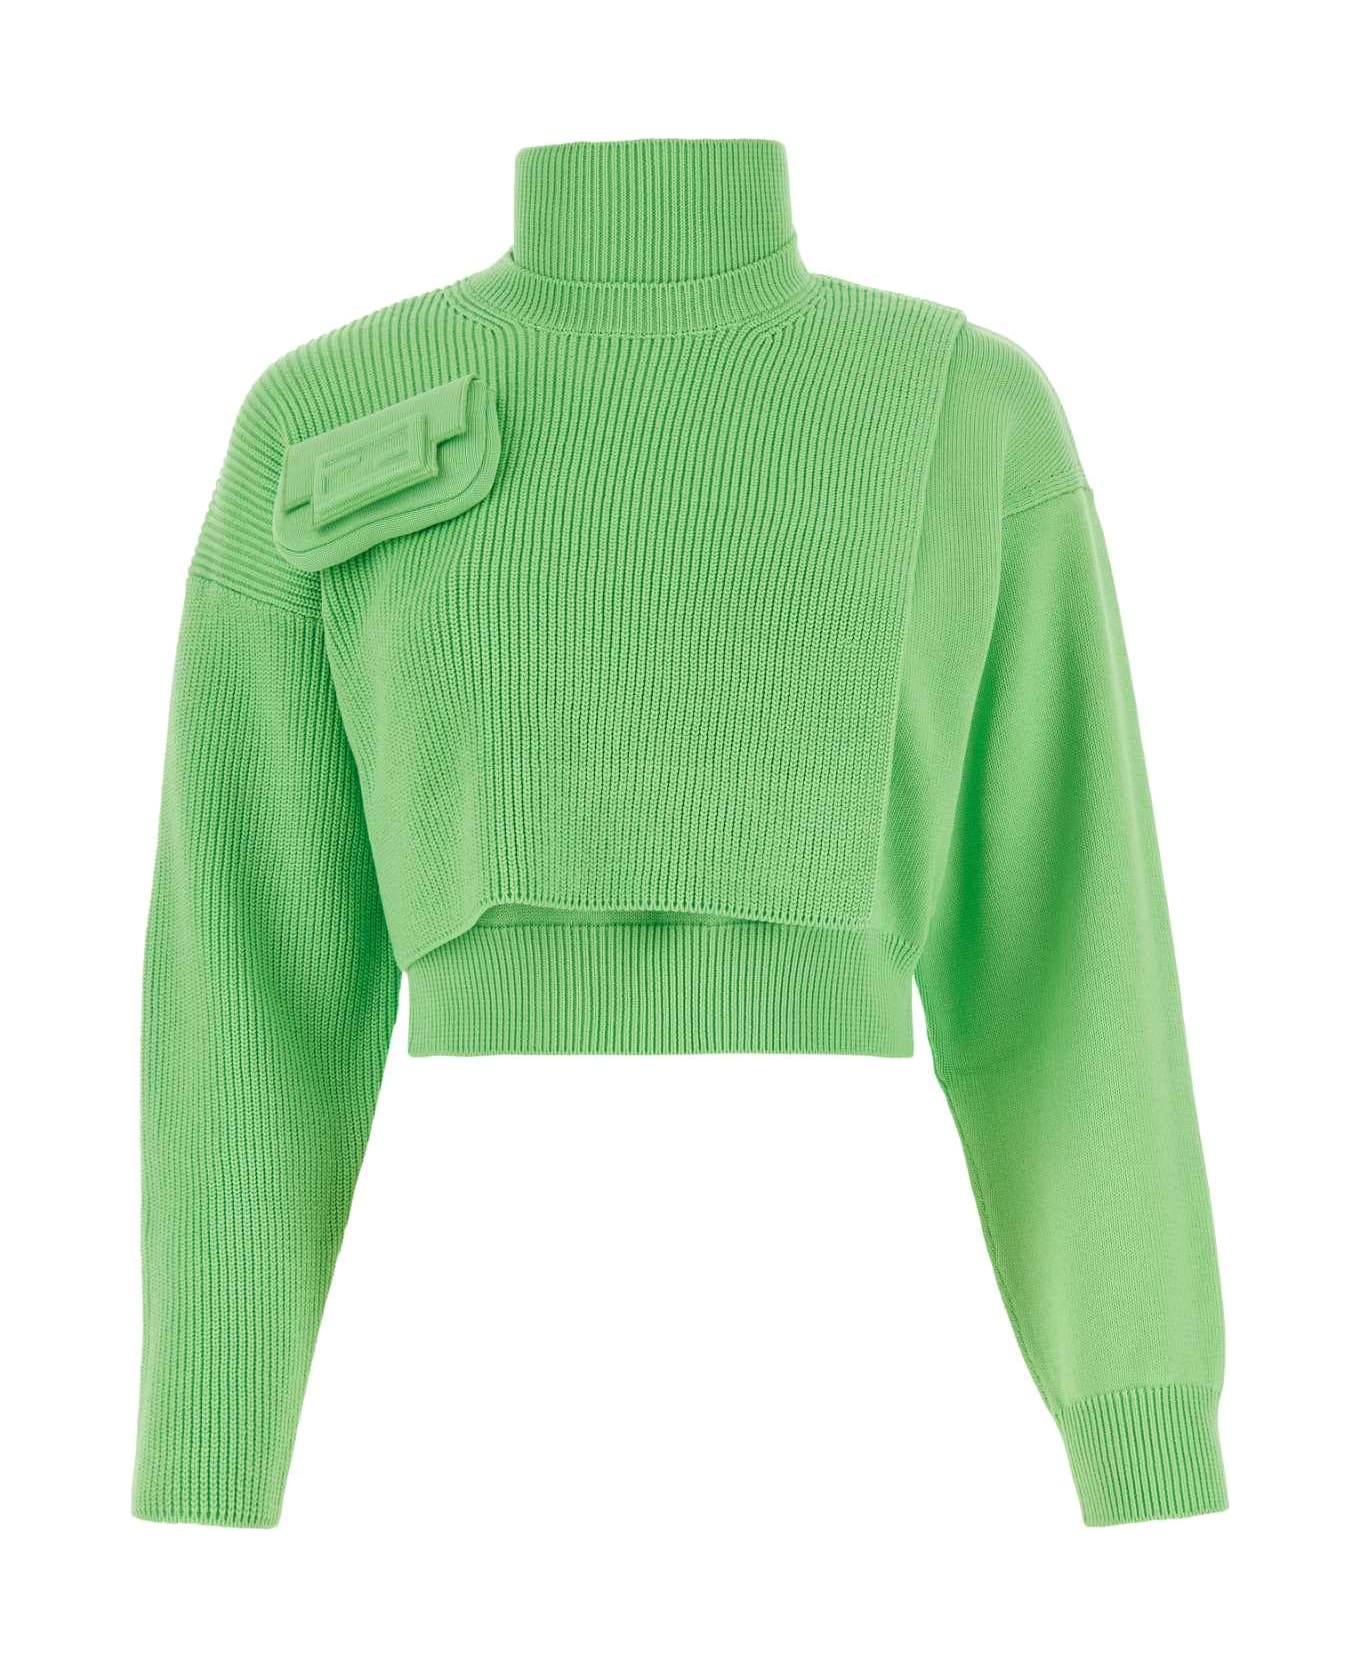 Fendi Light Green Stretch Cotton Sweater - BOUQUET